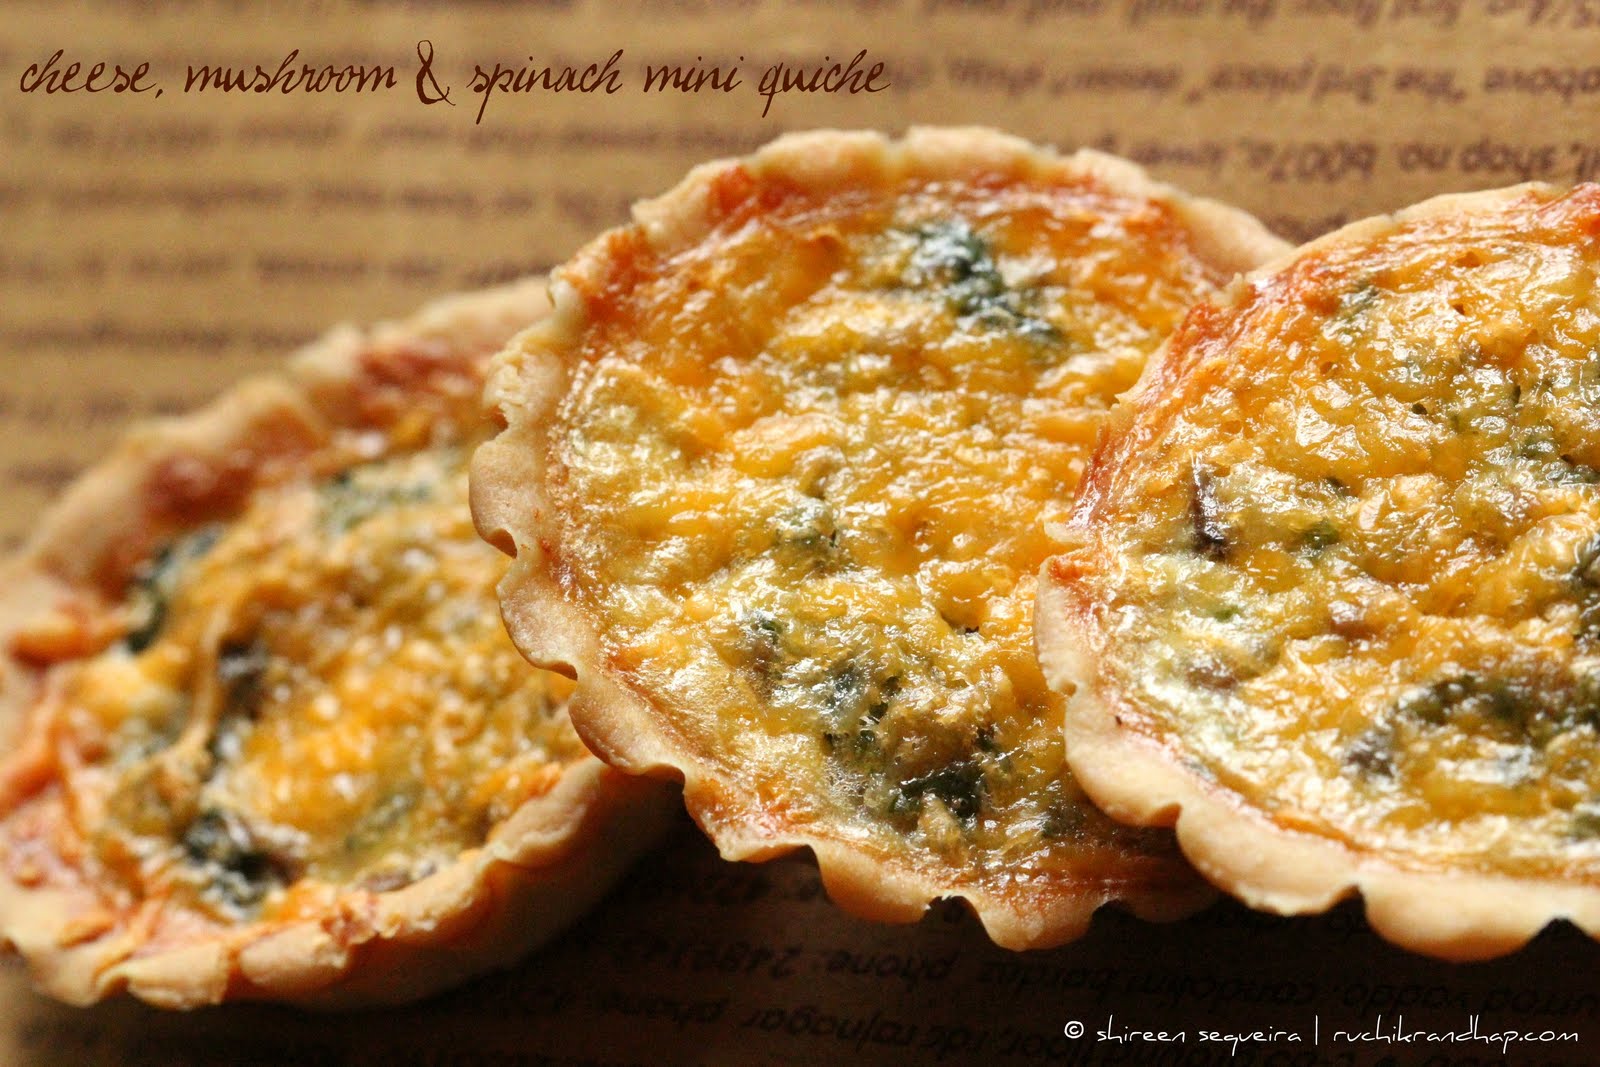 Cheese, Mushroom & Spinach Mini Quiche - Ruchik Randhap